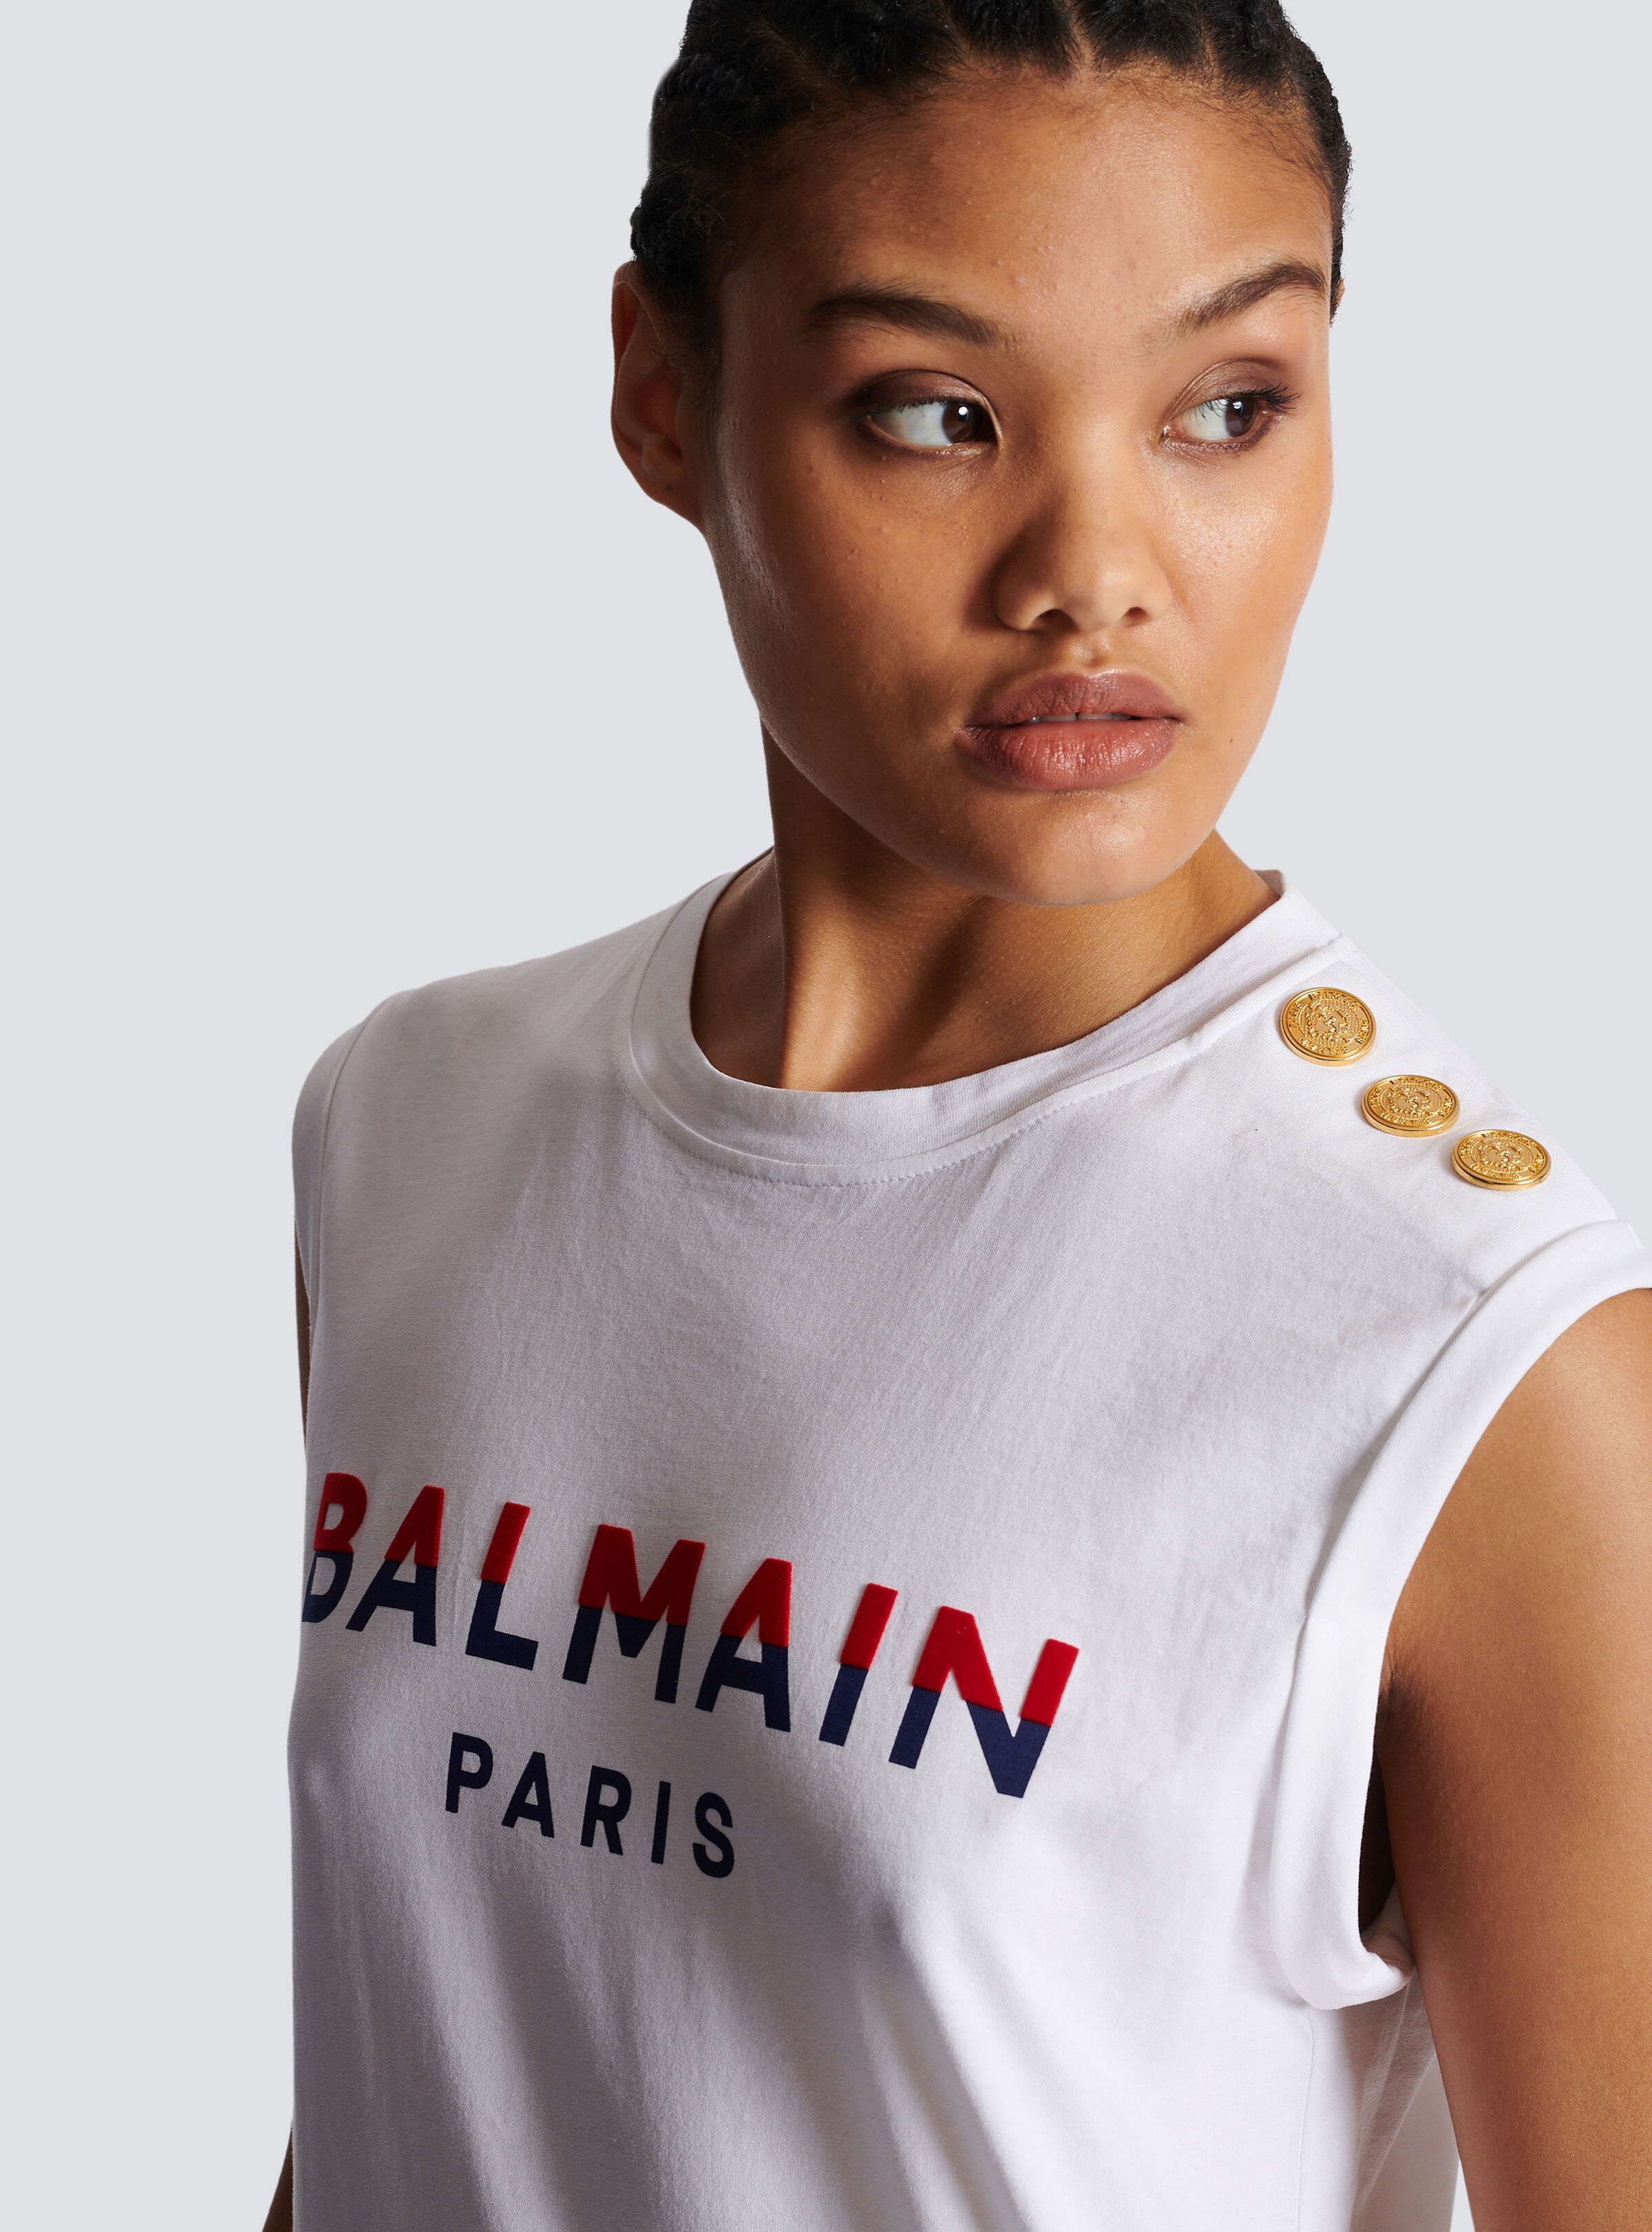 Flocked Balmain Paris T-Shirt - 7